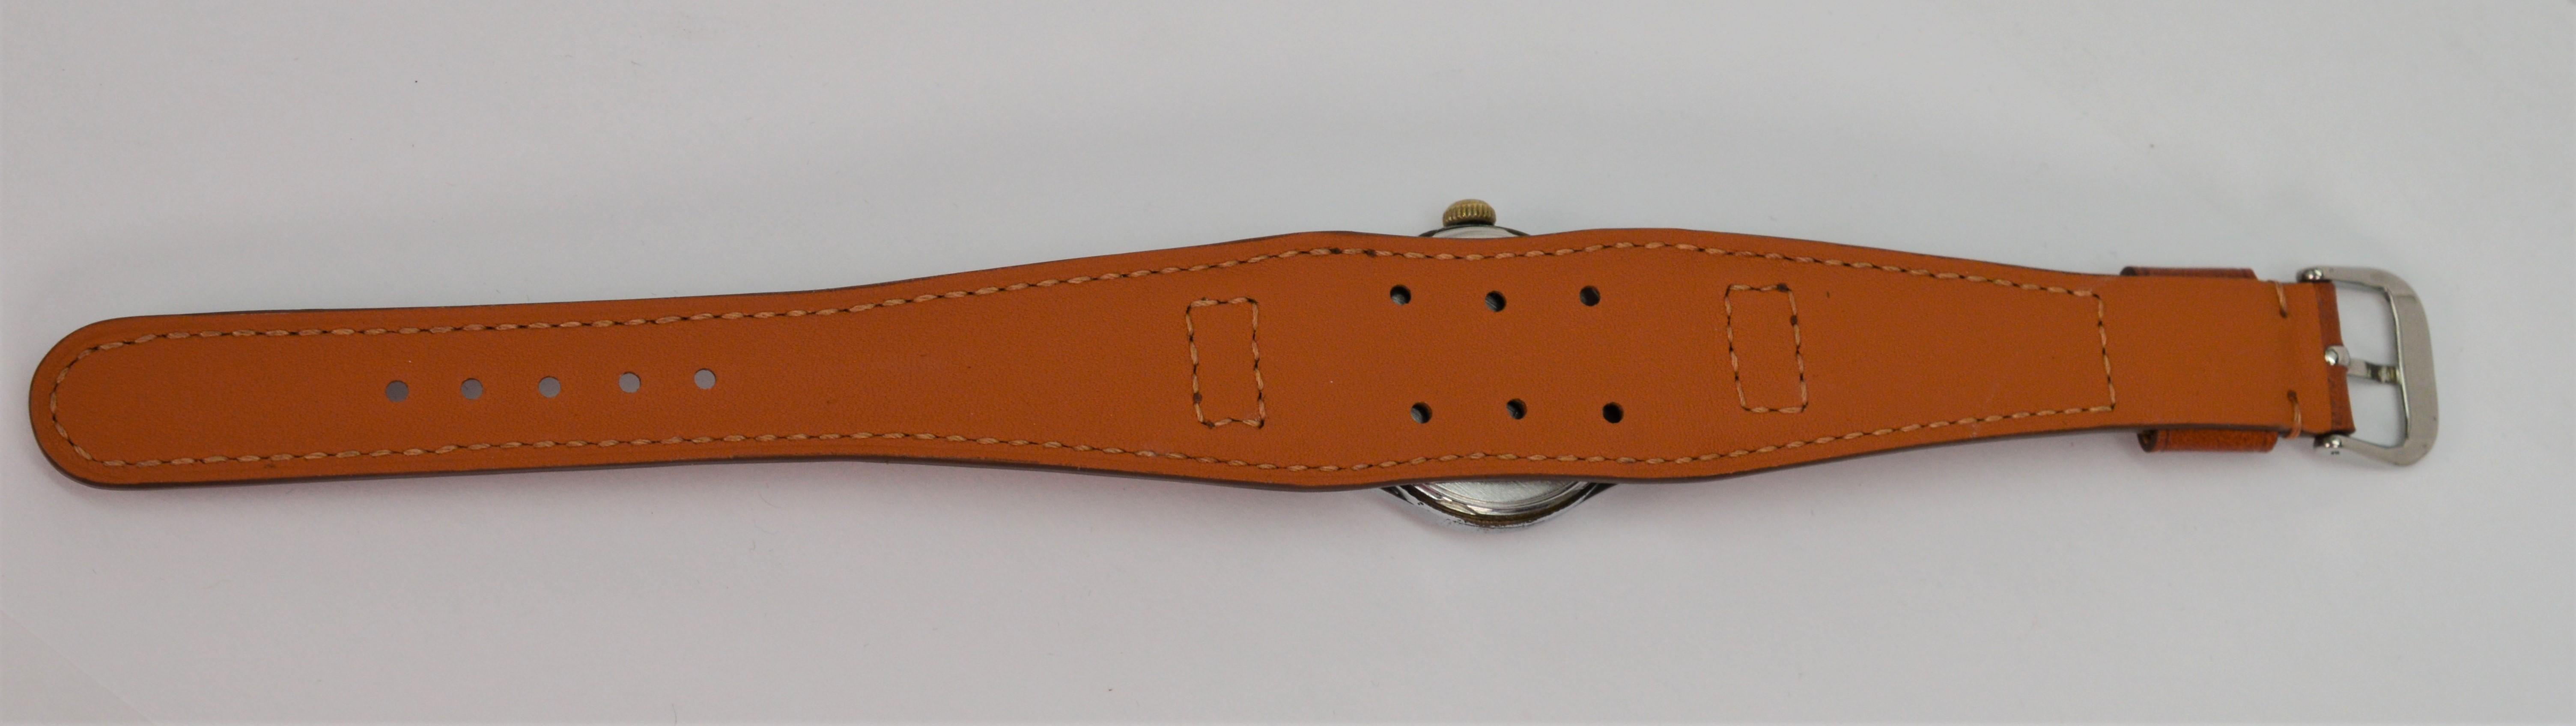 Vintage Eska Steel Military Style Men's Wrist Watch For Sale 2